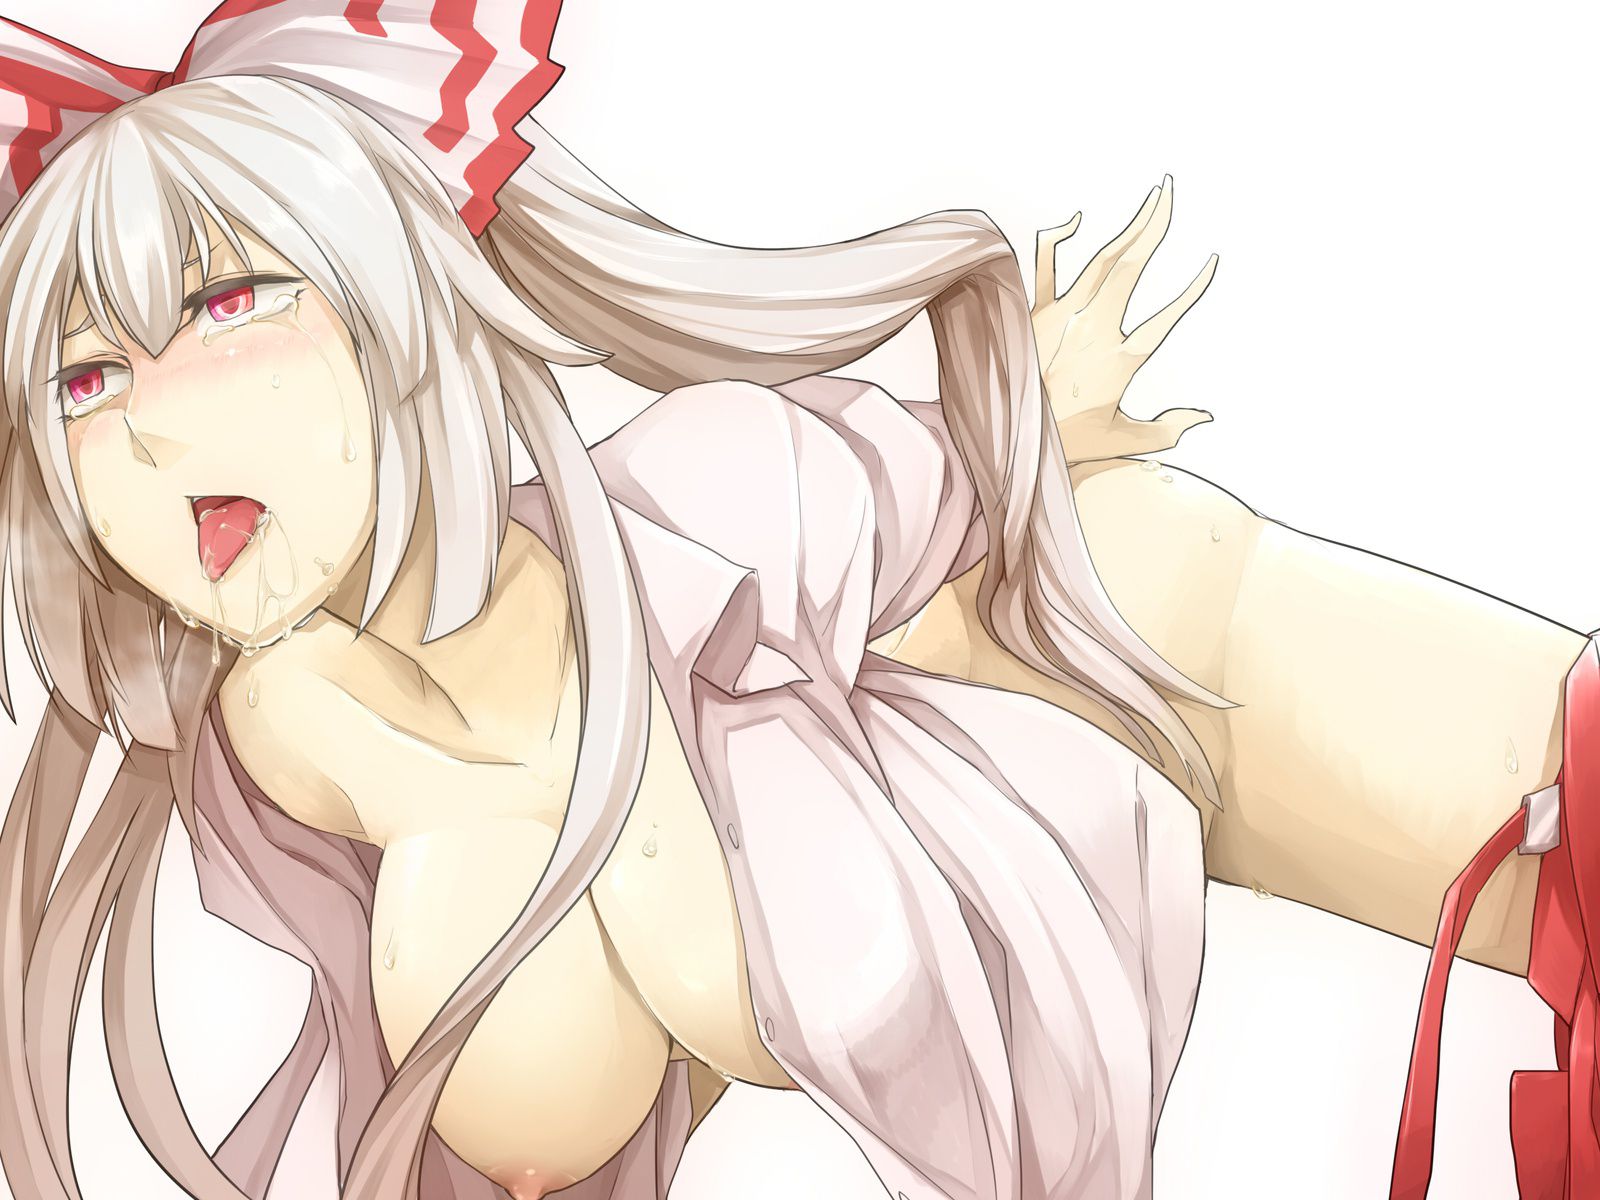 [Touhou Project] Fujiwara Sister Red's Inferno Erotic Image! Part 6 19